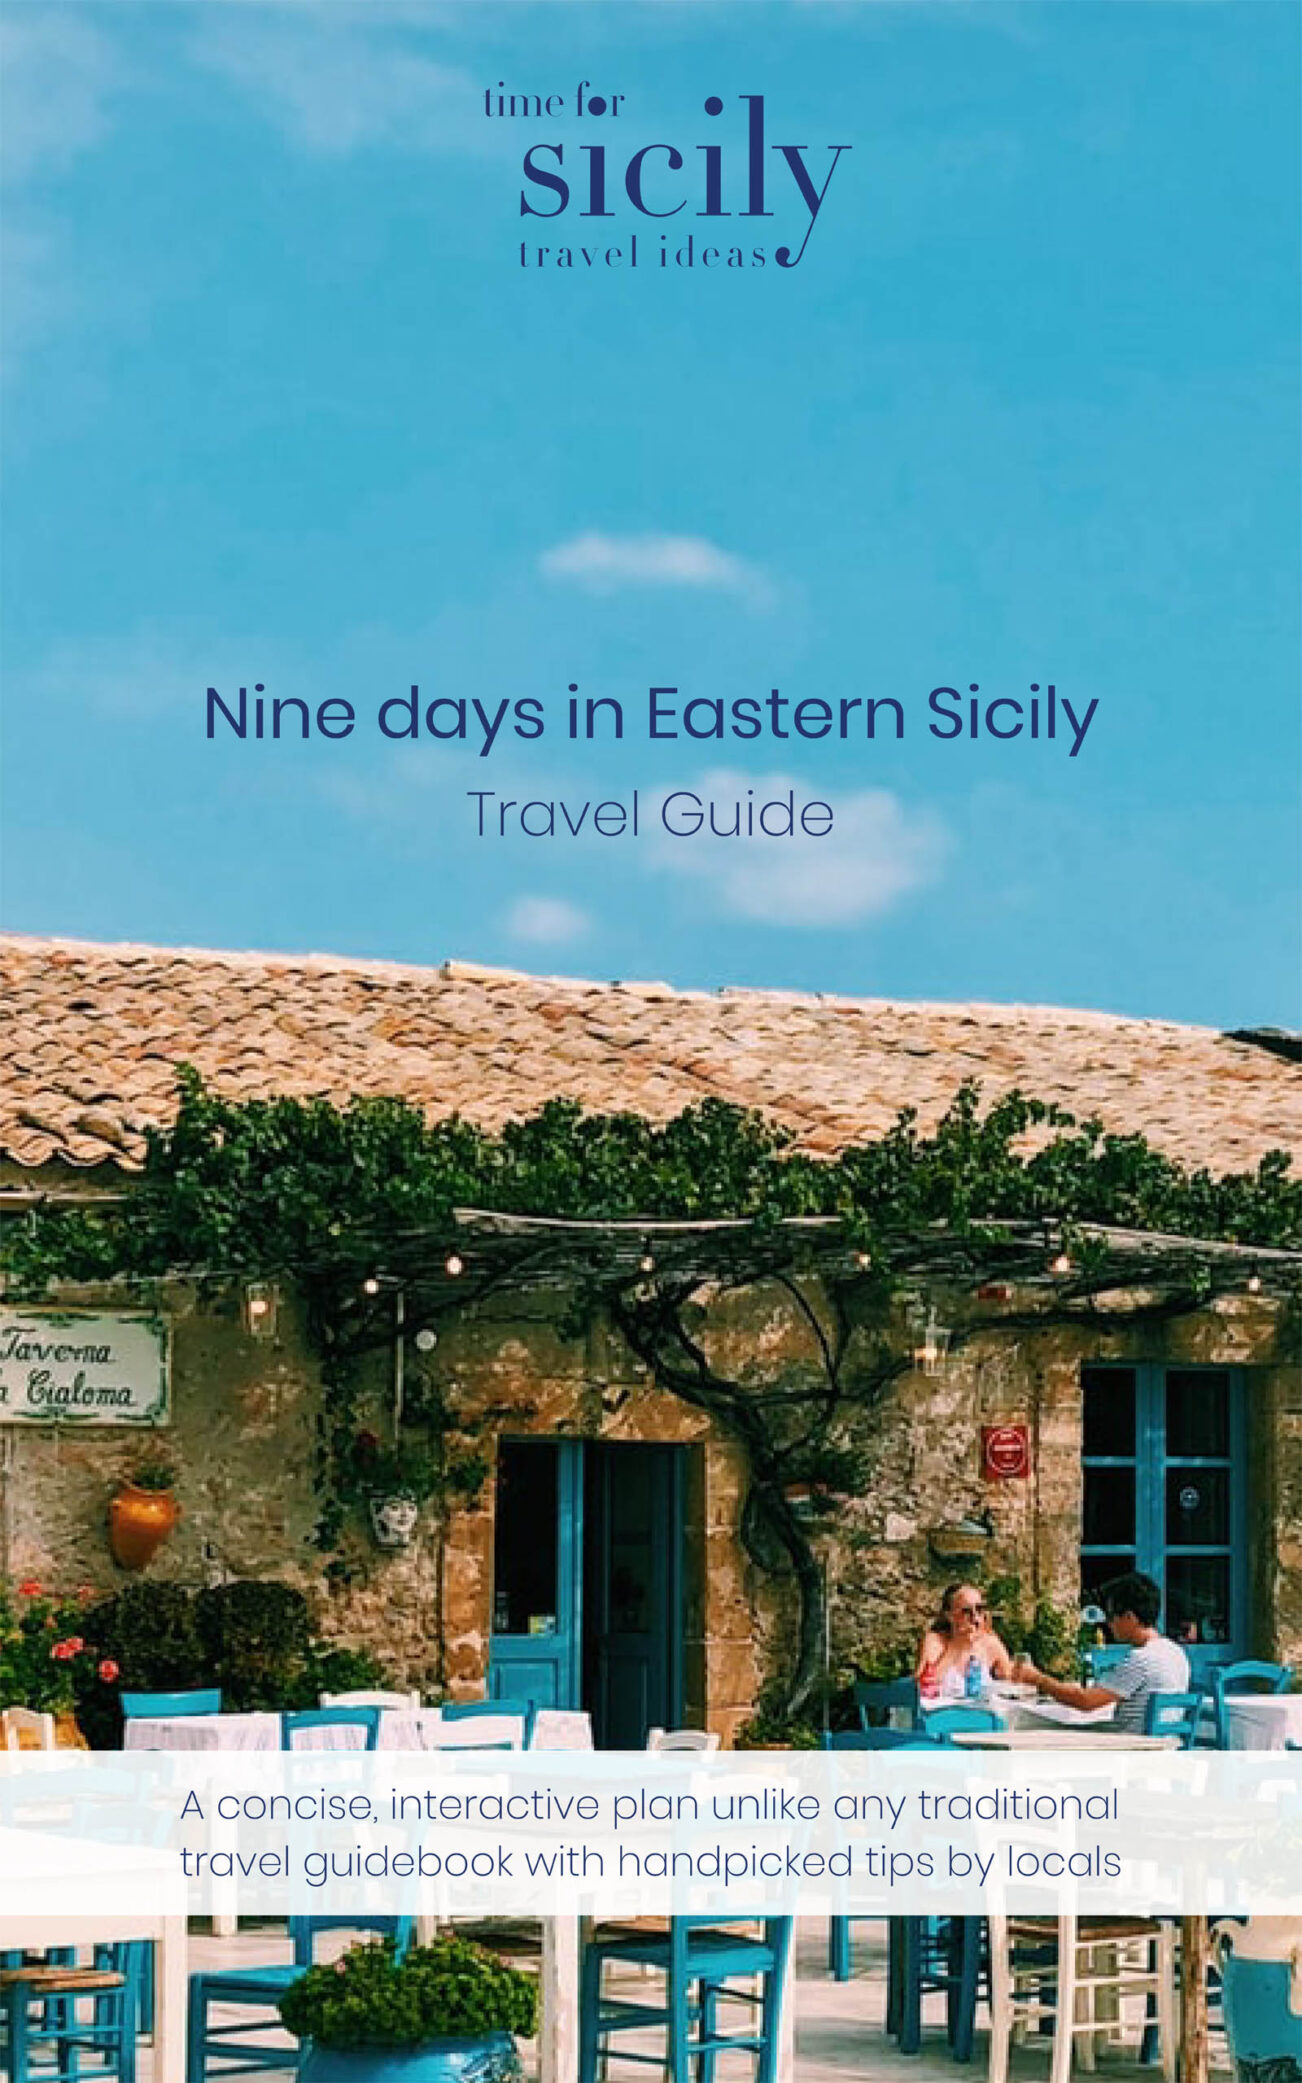 Nine days in Eastern Sicily travel guide